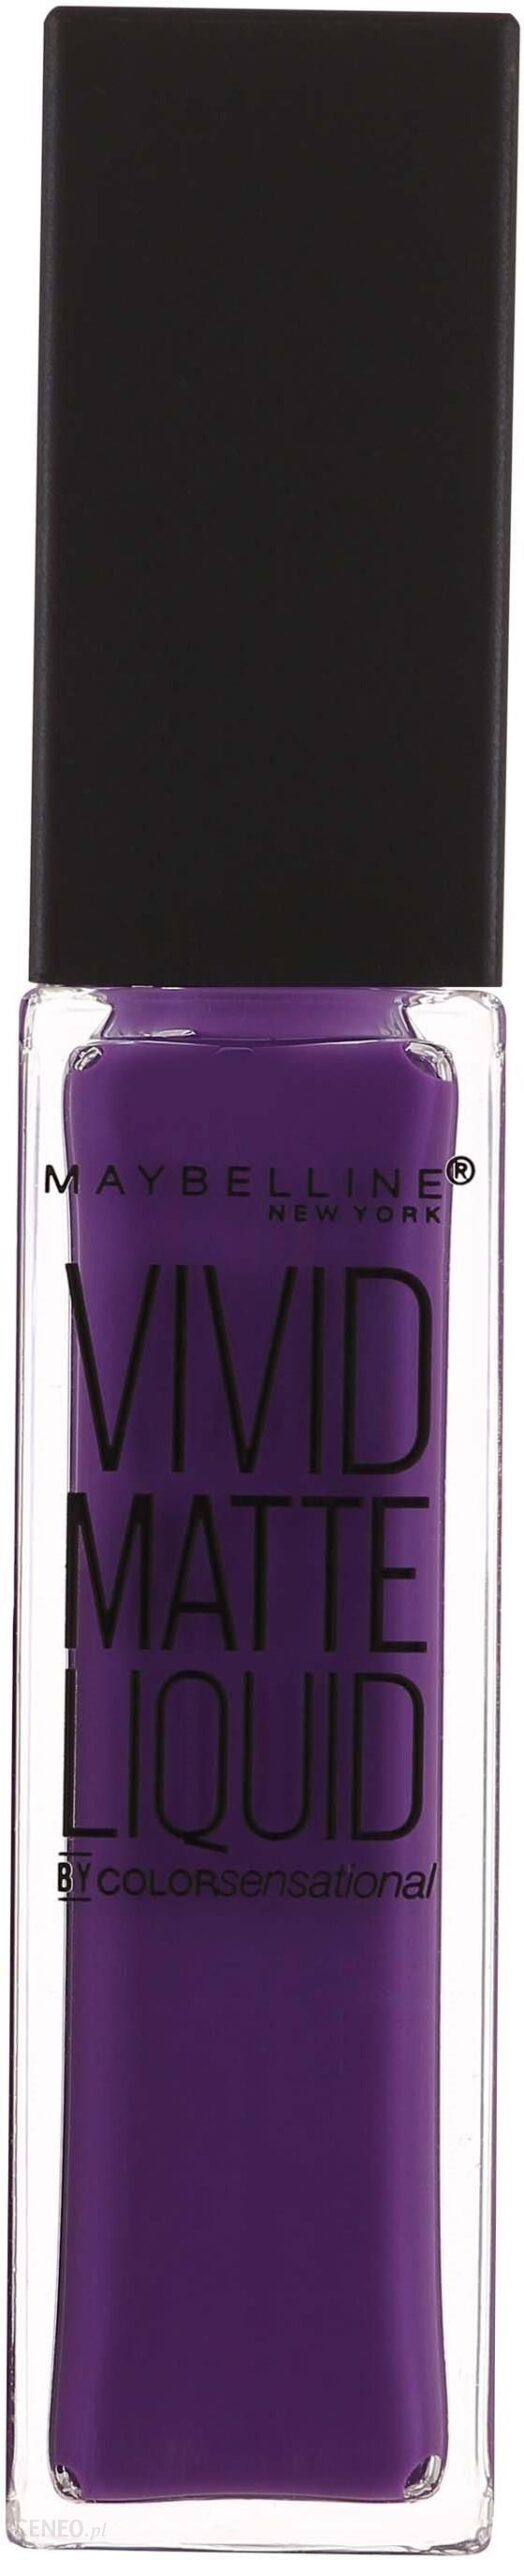 Maybelline New York Vivid Matte Liquid Matowa pomadka w płynie 43 Vivid Violet 8 ml